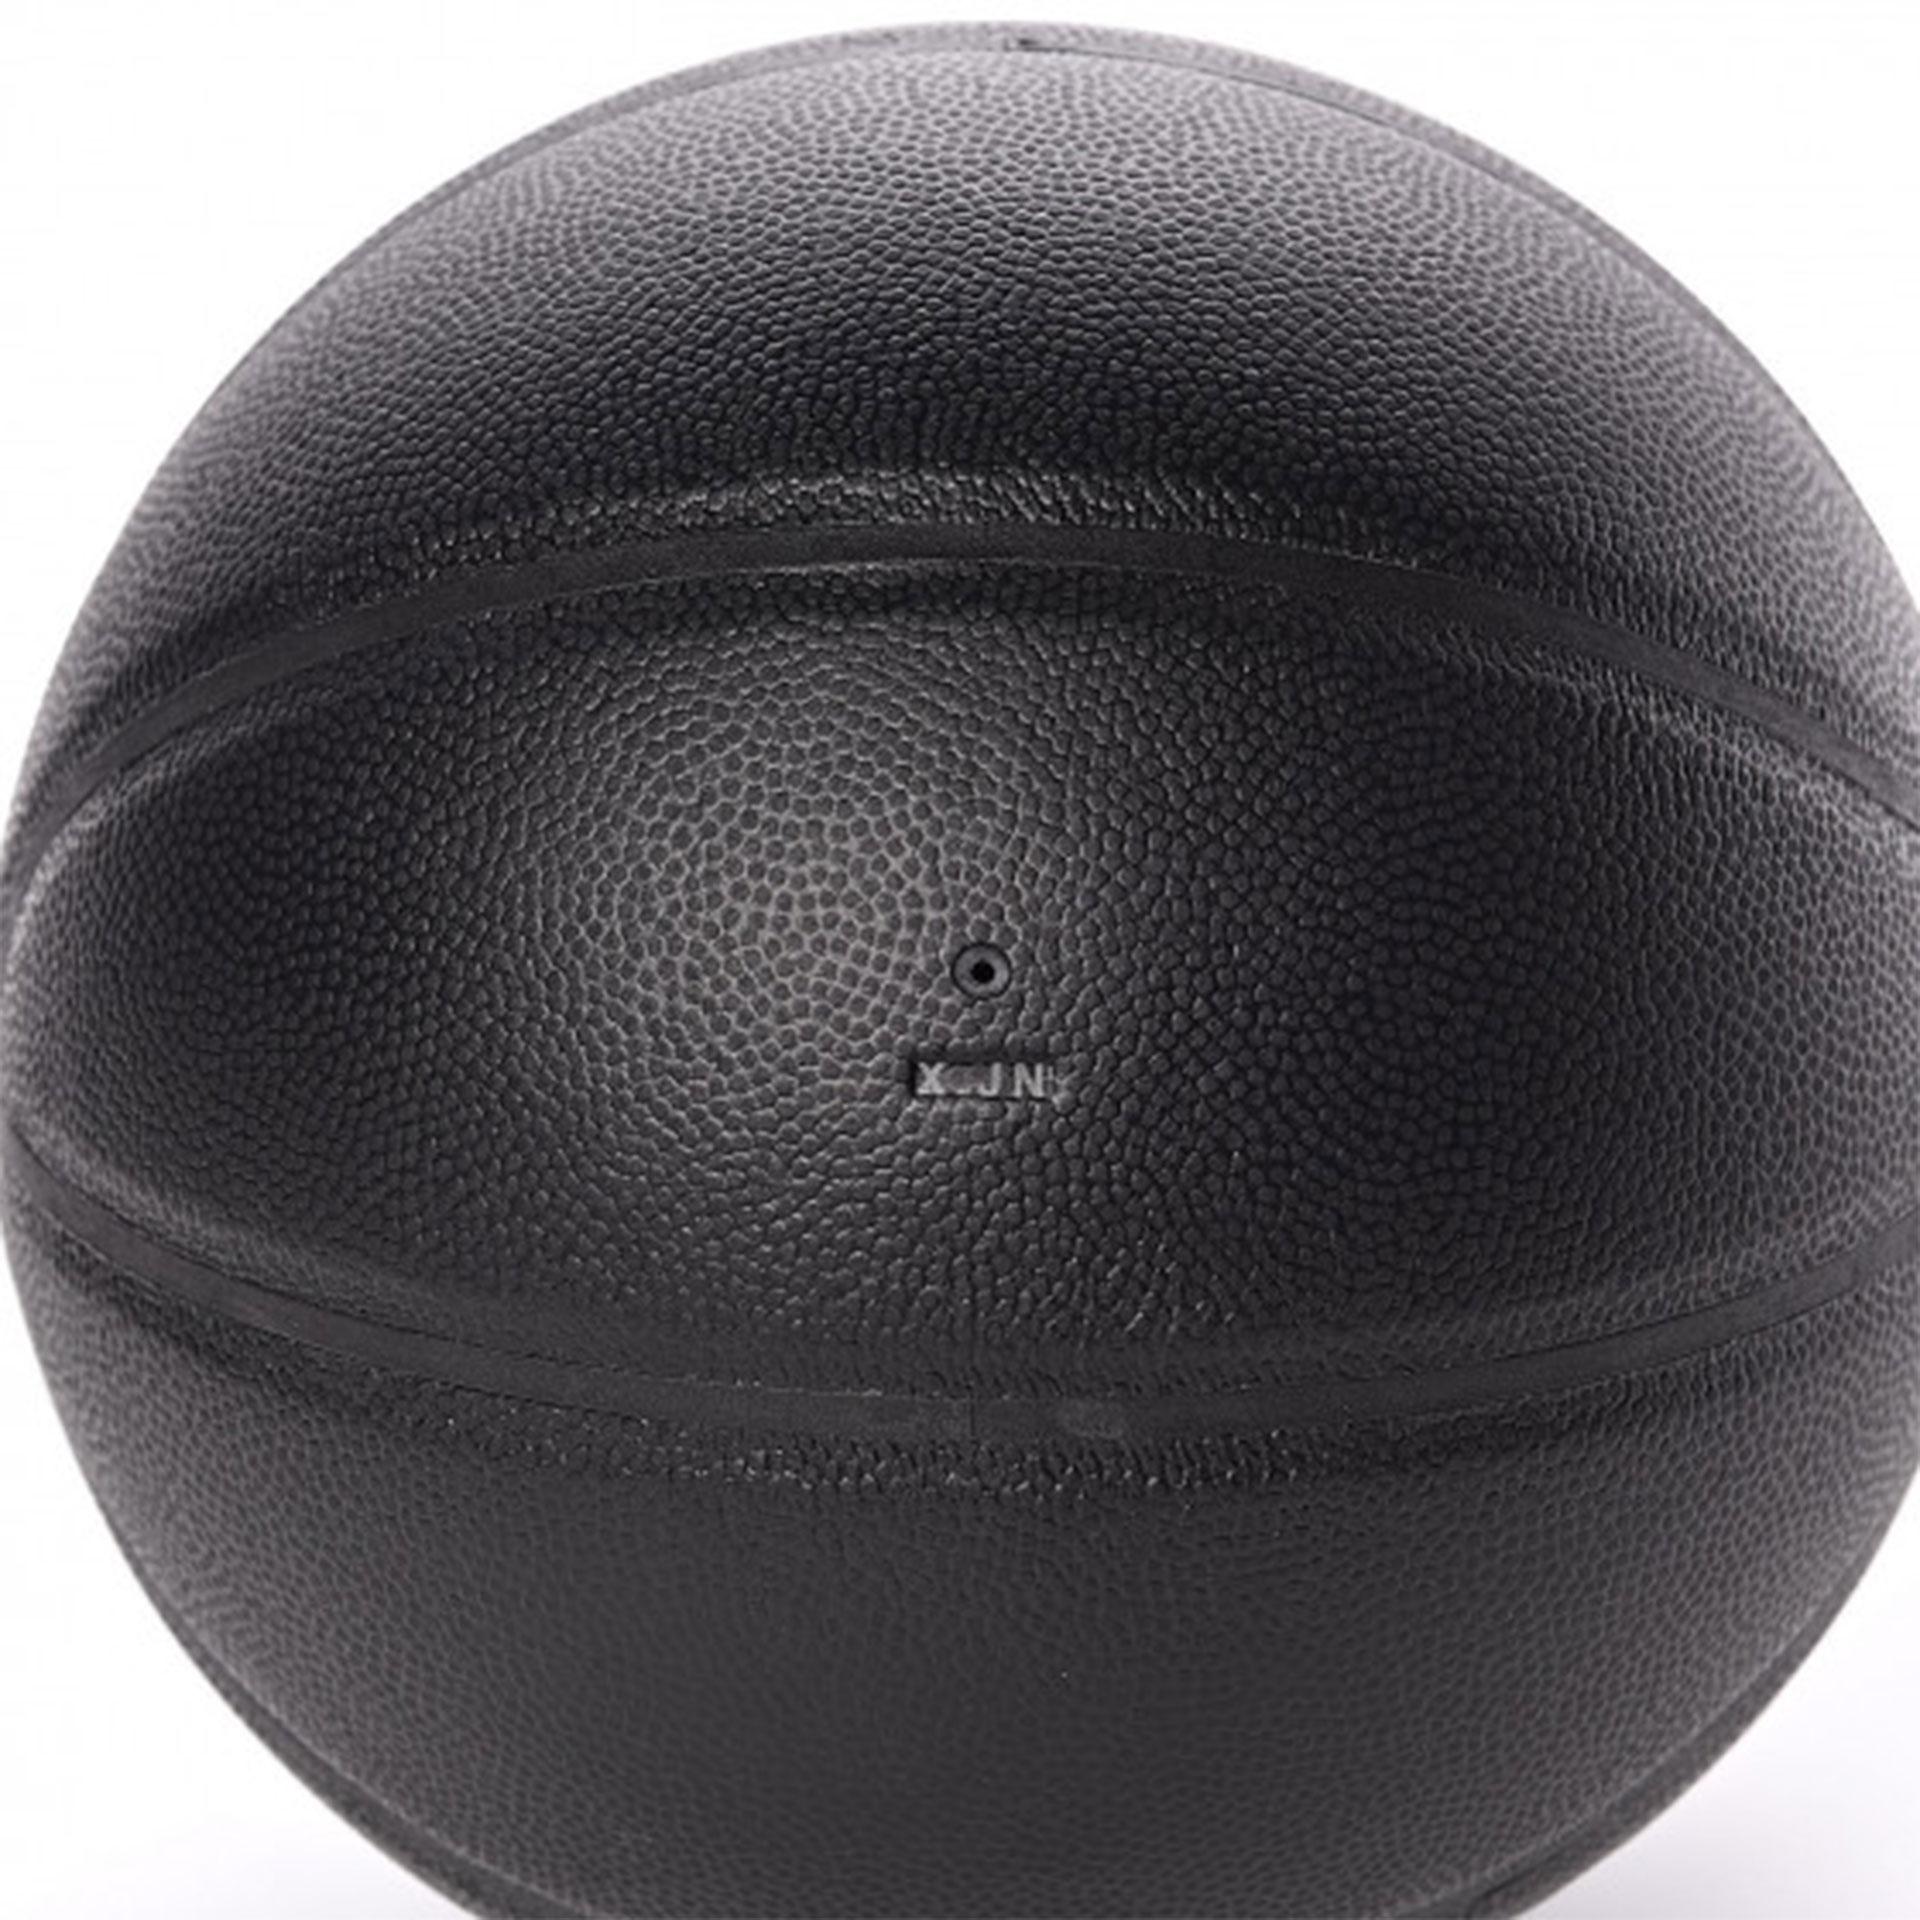 Chanel Rare 2018 Black Lambskin Chain Net Collectors Basketball  For Sale 3